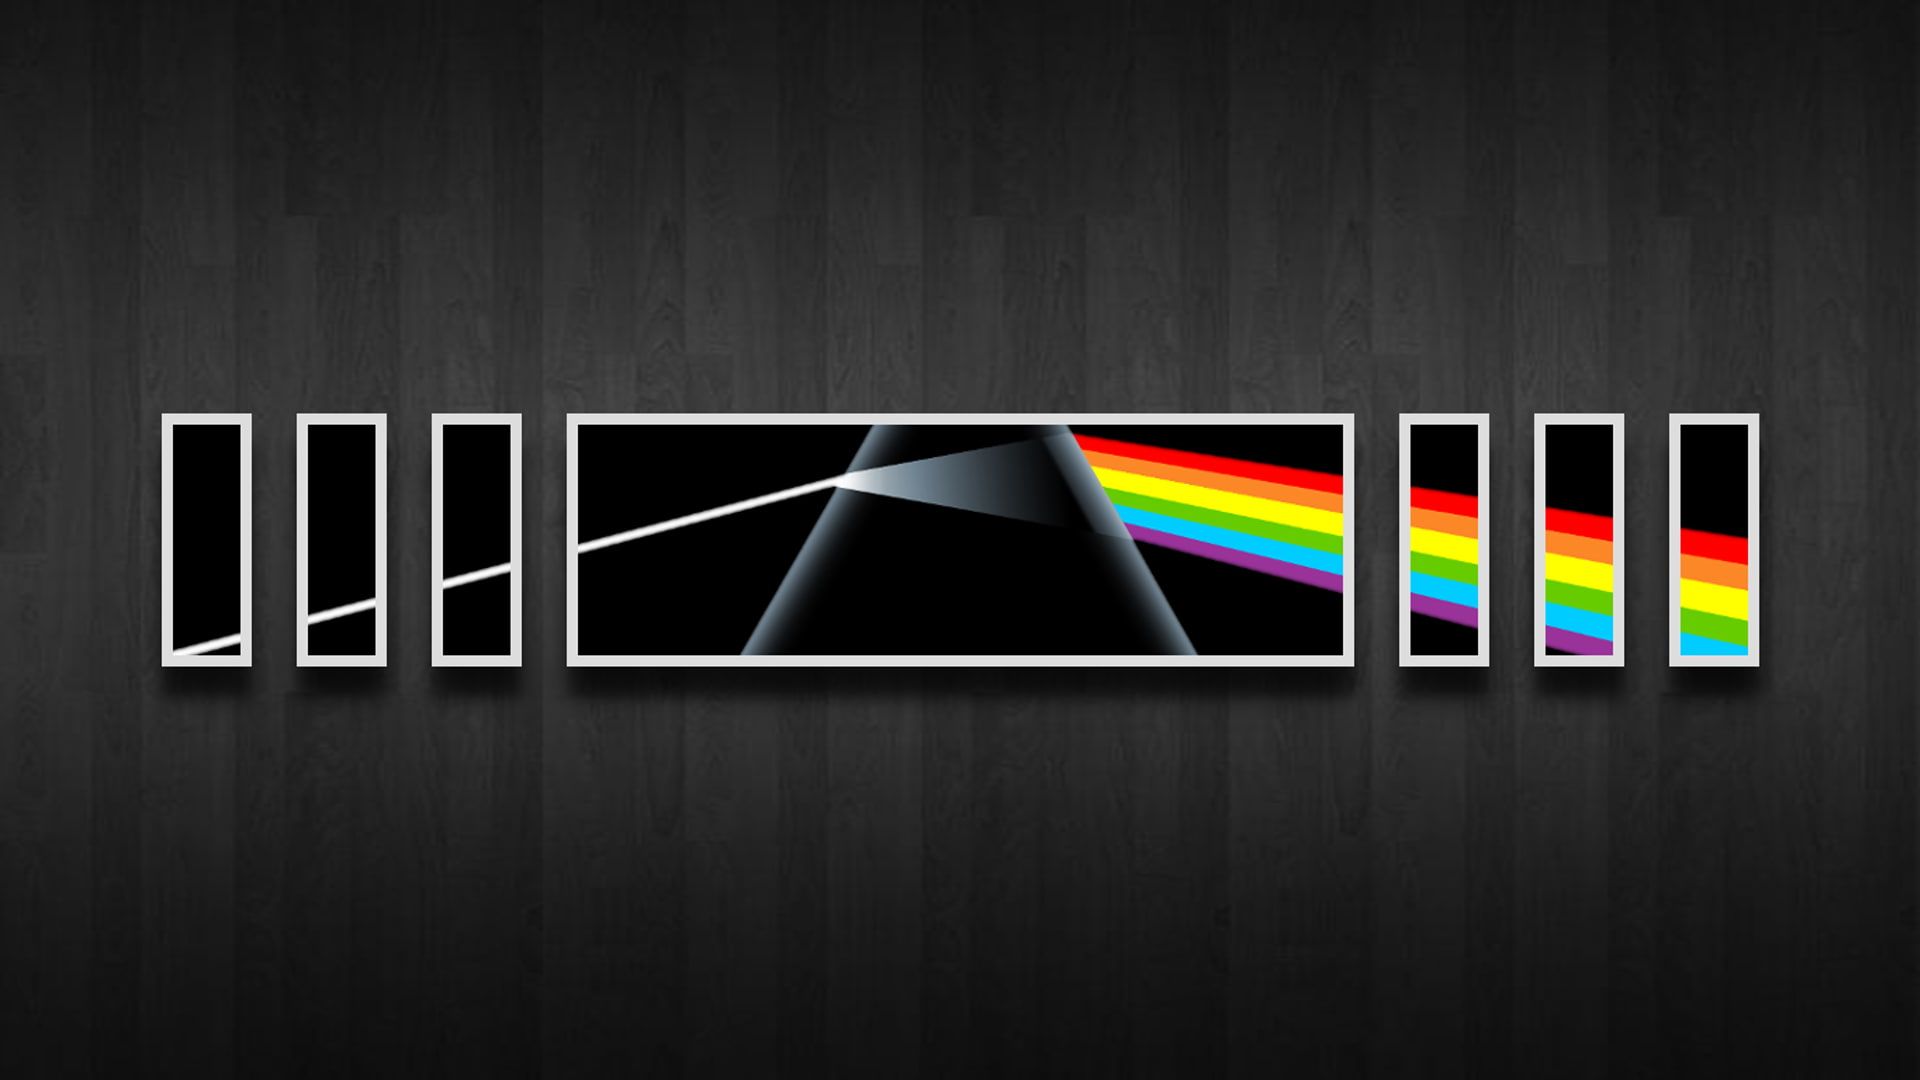 Pink Floyd album covers P #wallpaper #hdwallpaper #desktop. Pink floyd album covers, Pink floyd albums, Album covers